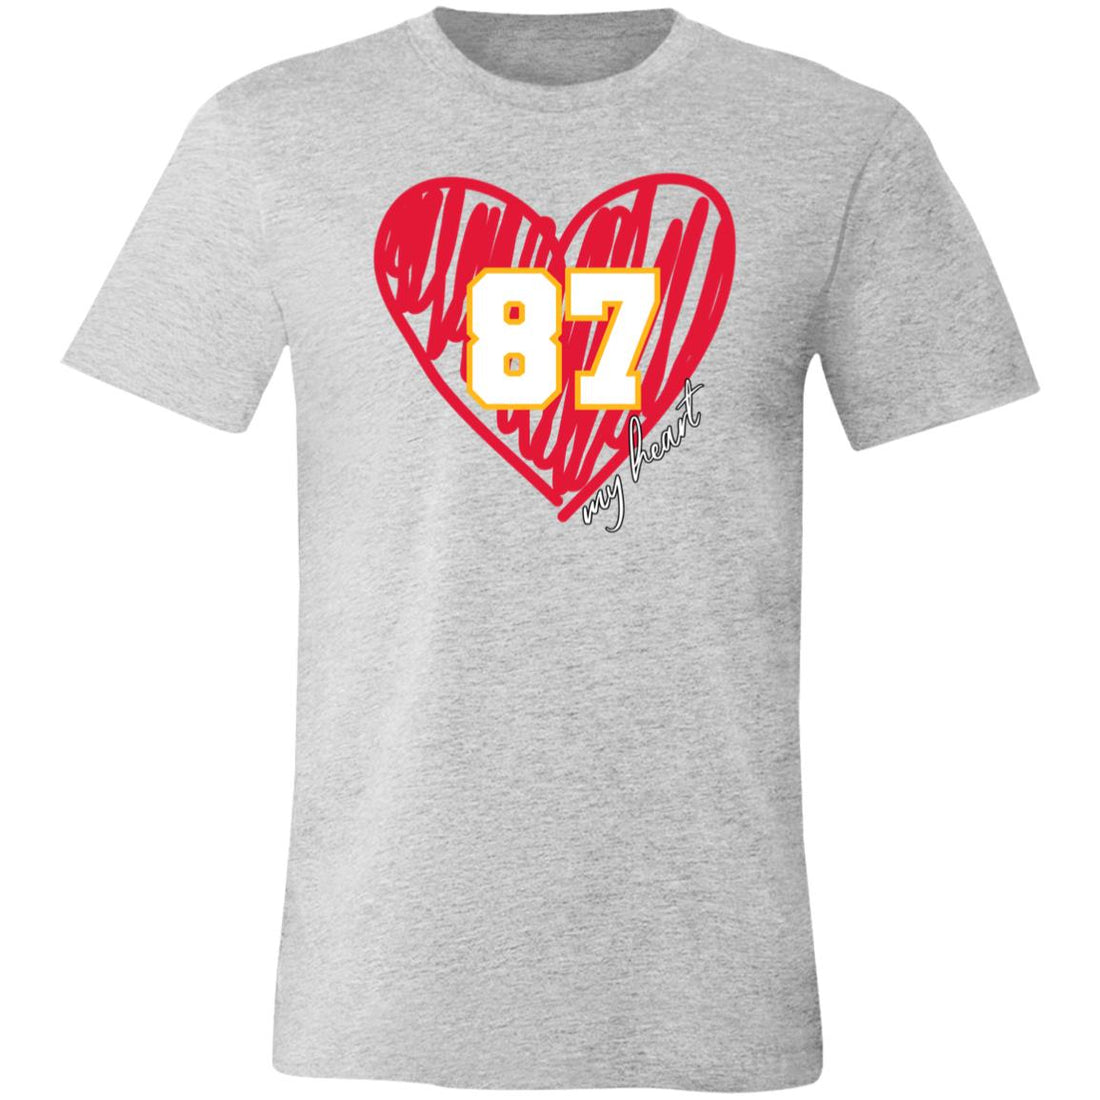 87 My Heart T-Shirt - T-Shirts - Positively Sassy - 87 My Heart T-Shirt